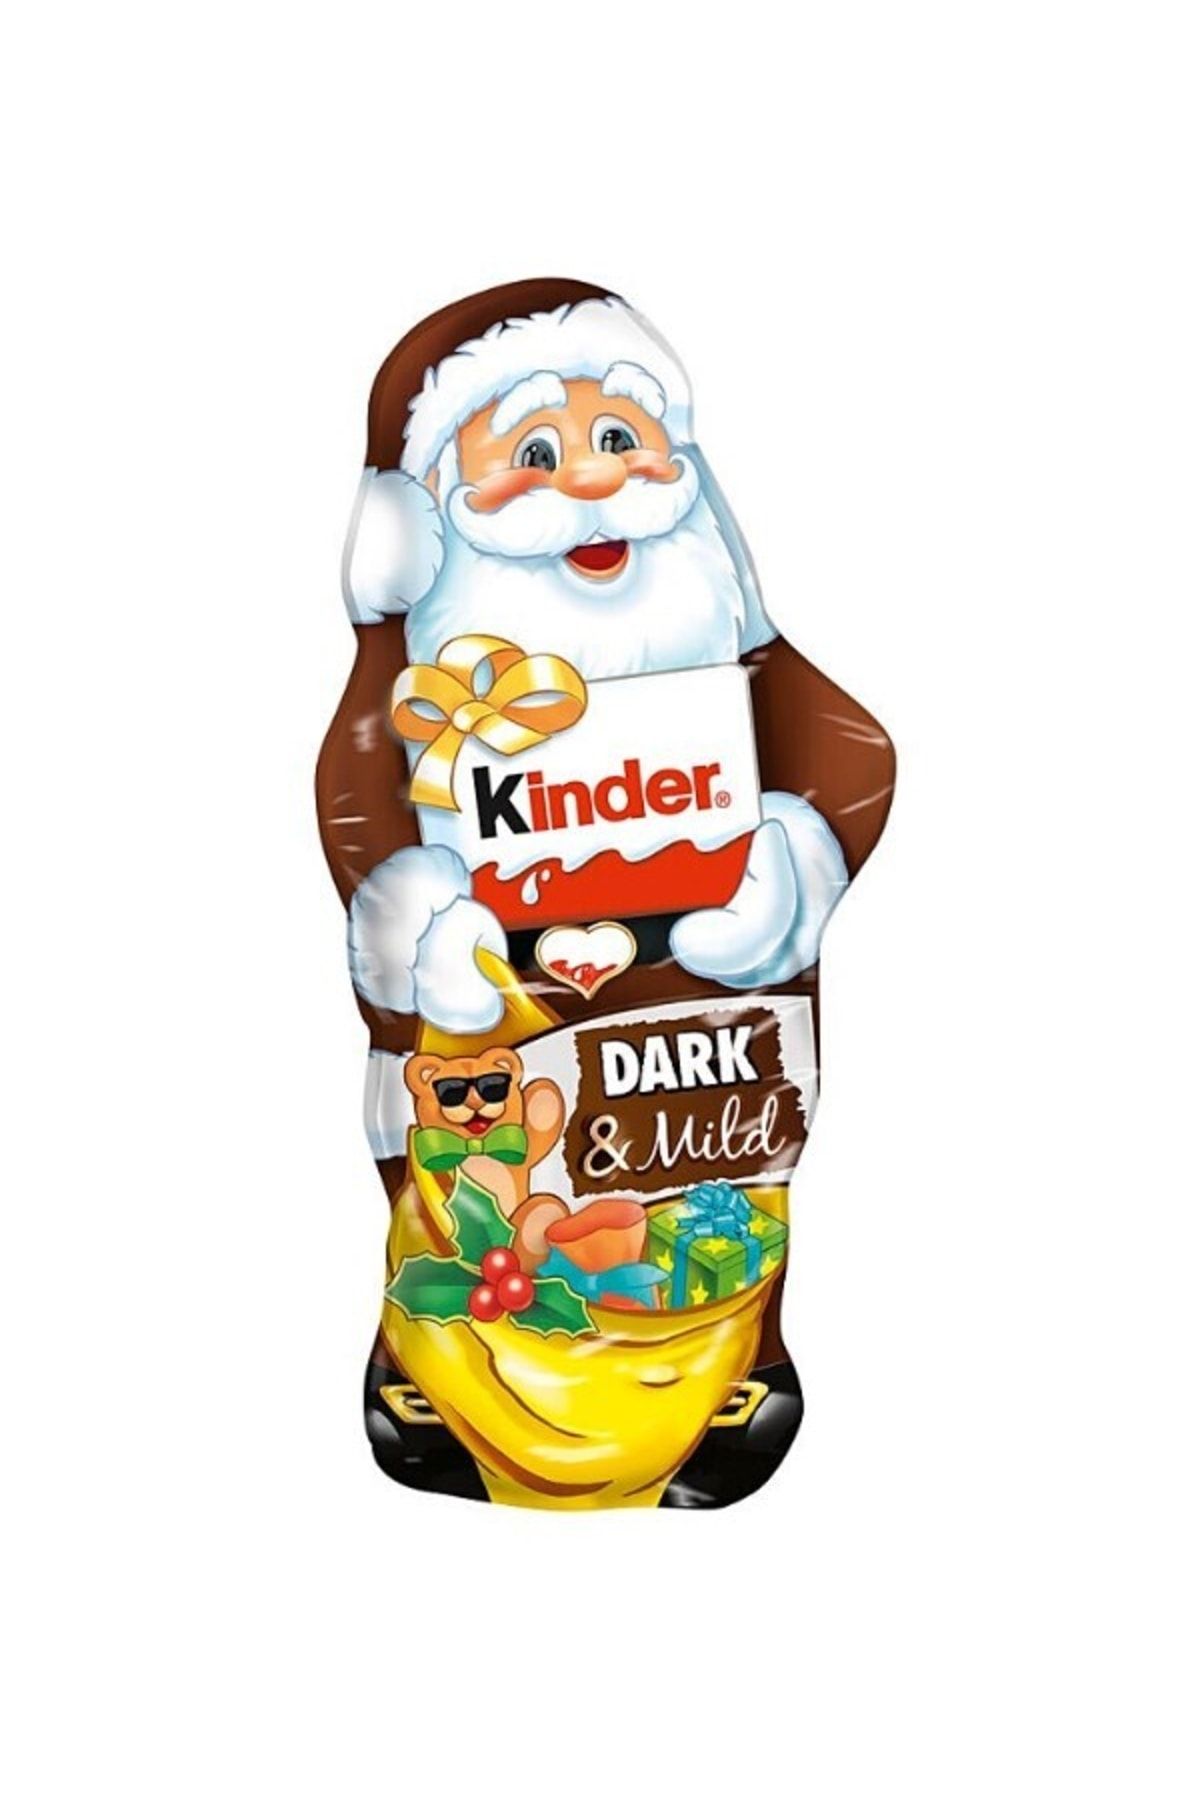 Киндер мороз. Шоколад kinder дед Мороз. Киндер фигурки шоколадные. Фигурка шоколадная дед Мороз kinder. Шоколадный дед Мороз Милка.